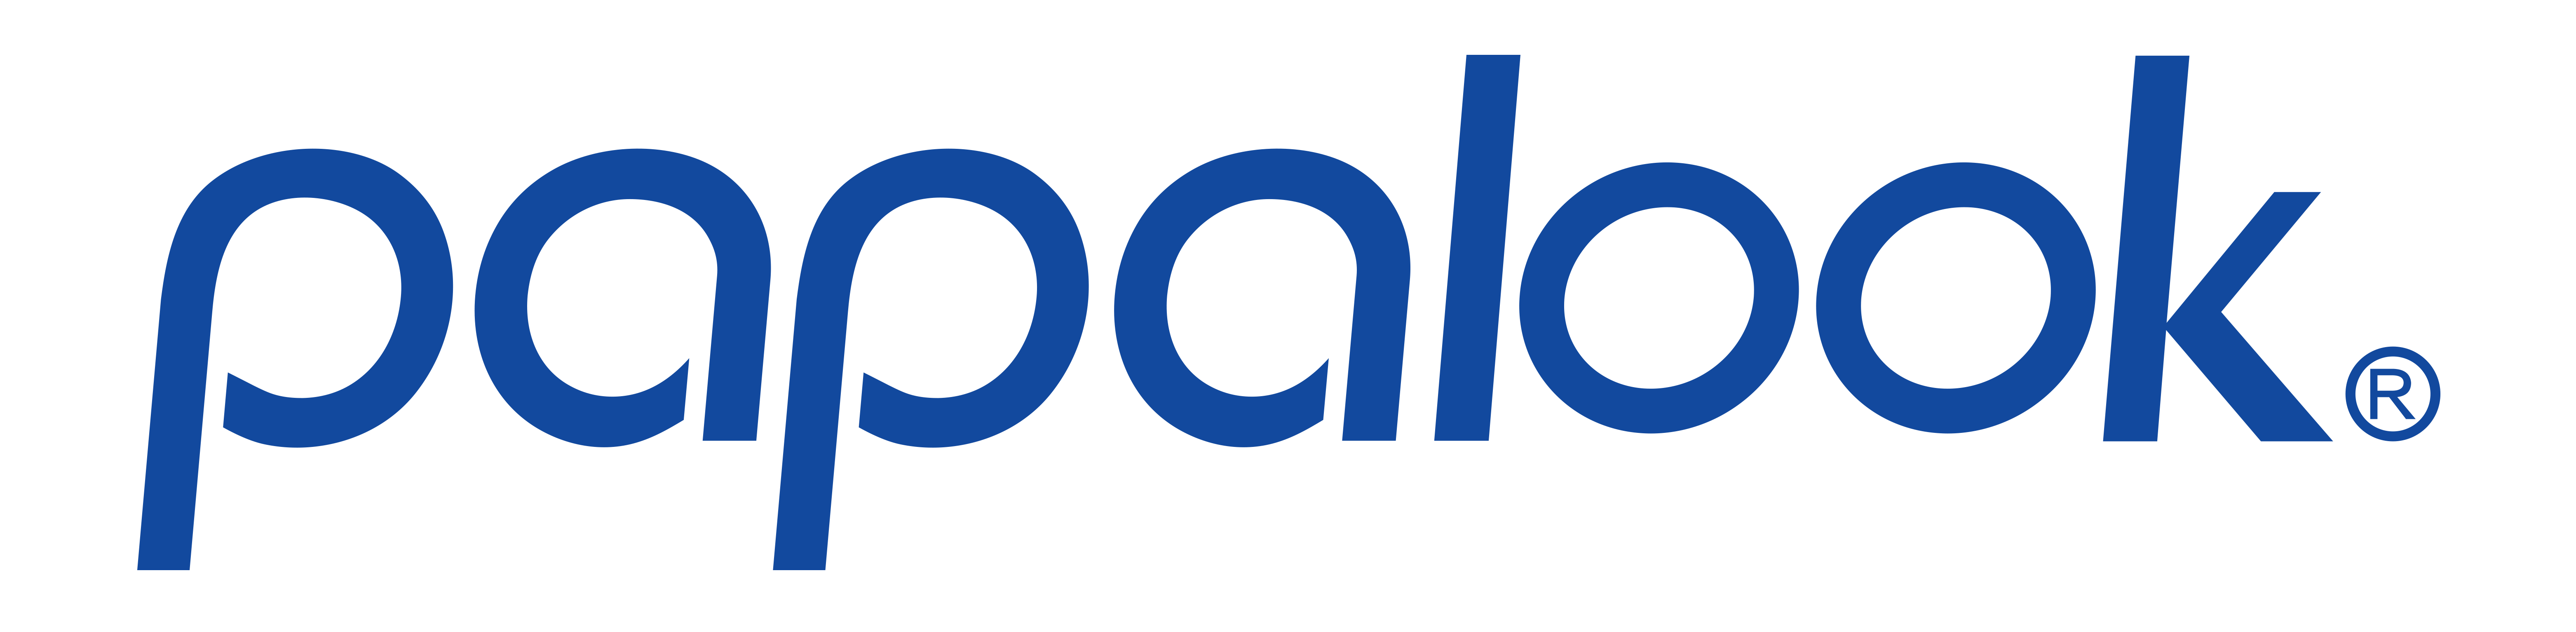 Papalook logo